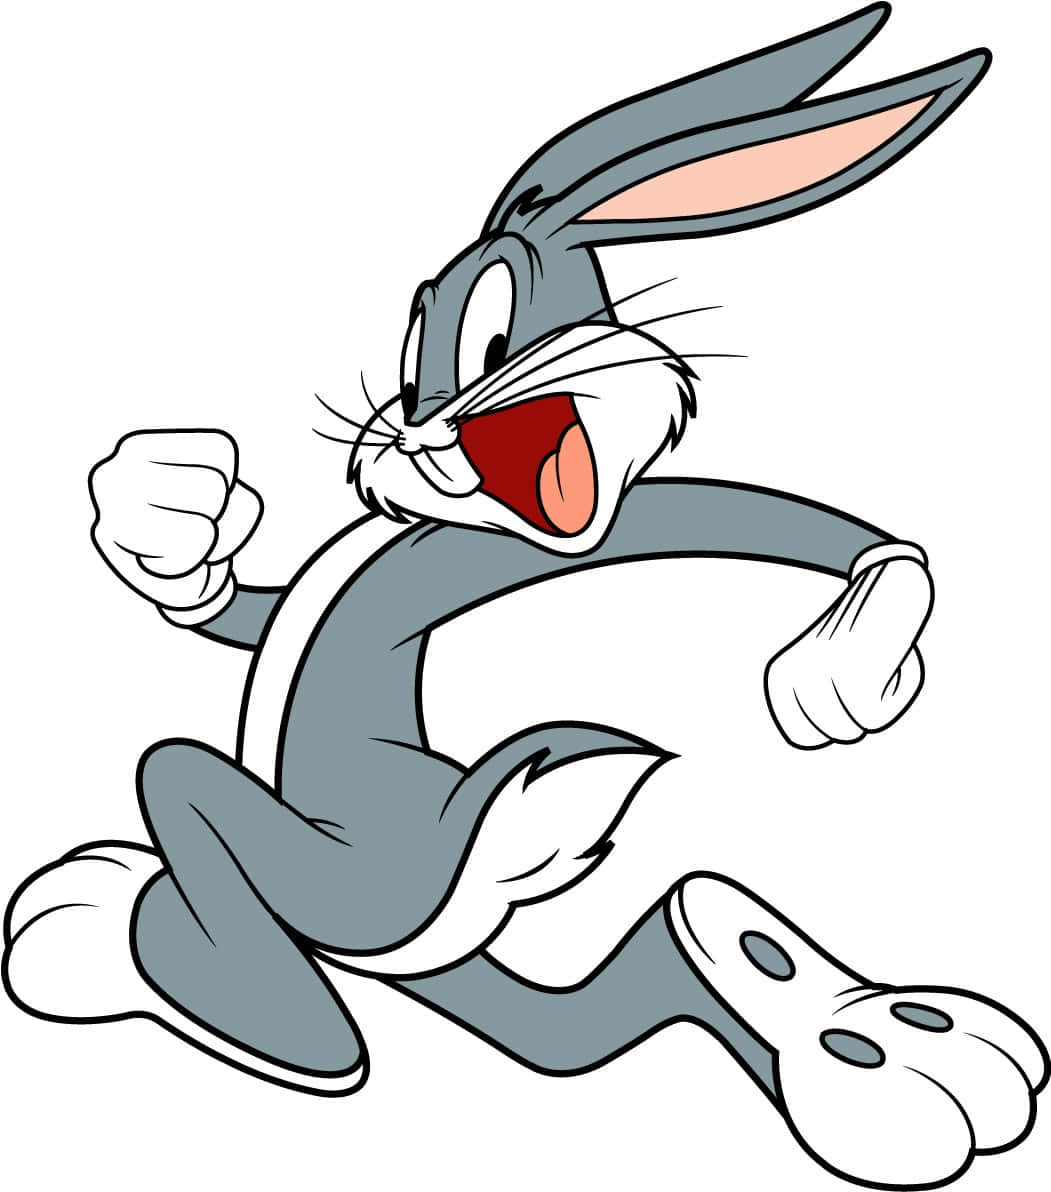 Bugs Bunny, a Looney Tunes Icon